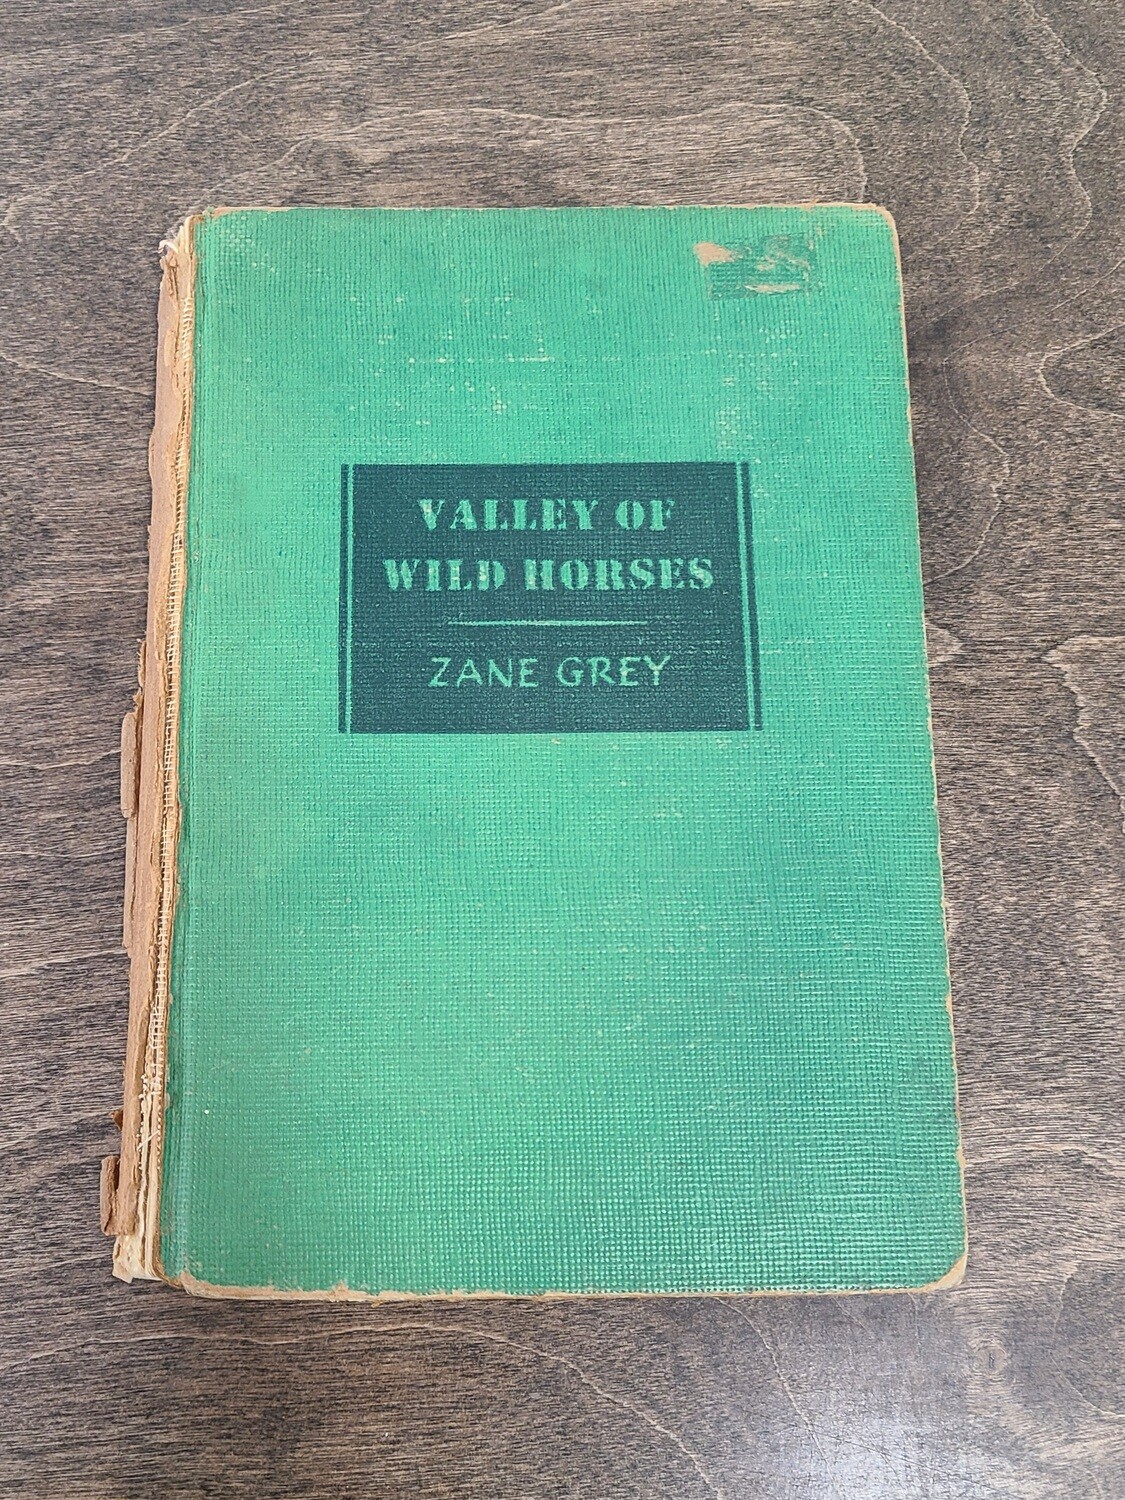 Valley of Wild Horses by Zane Grey